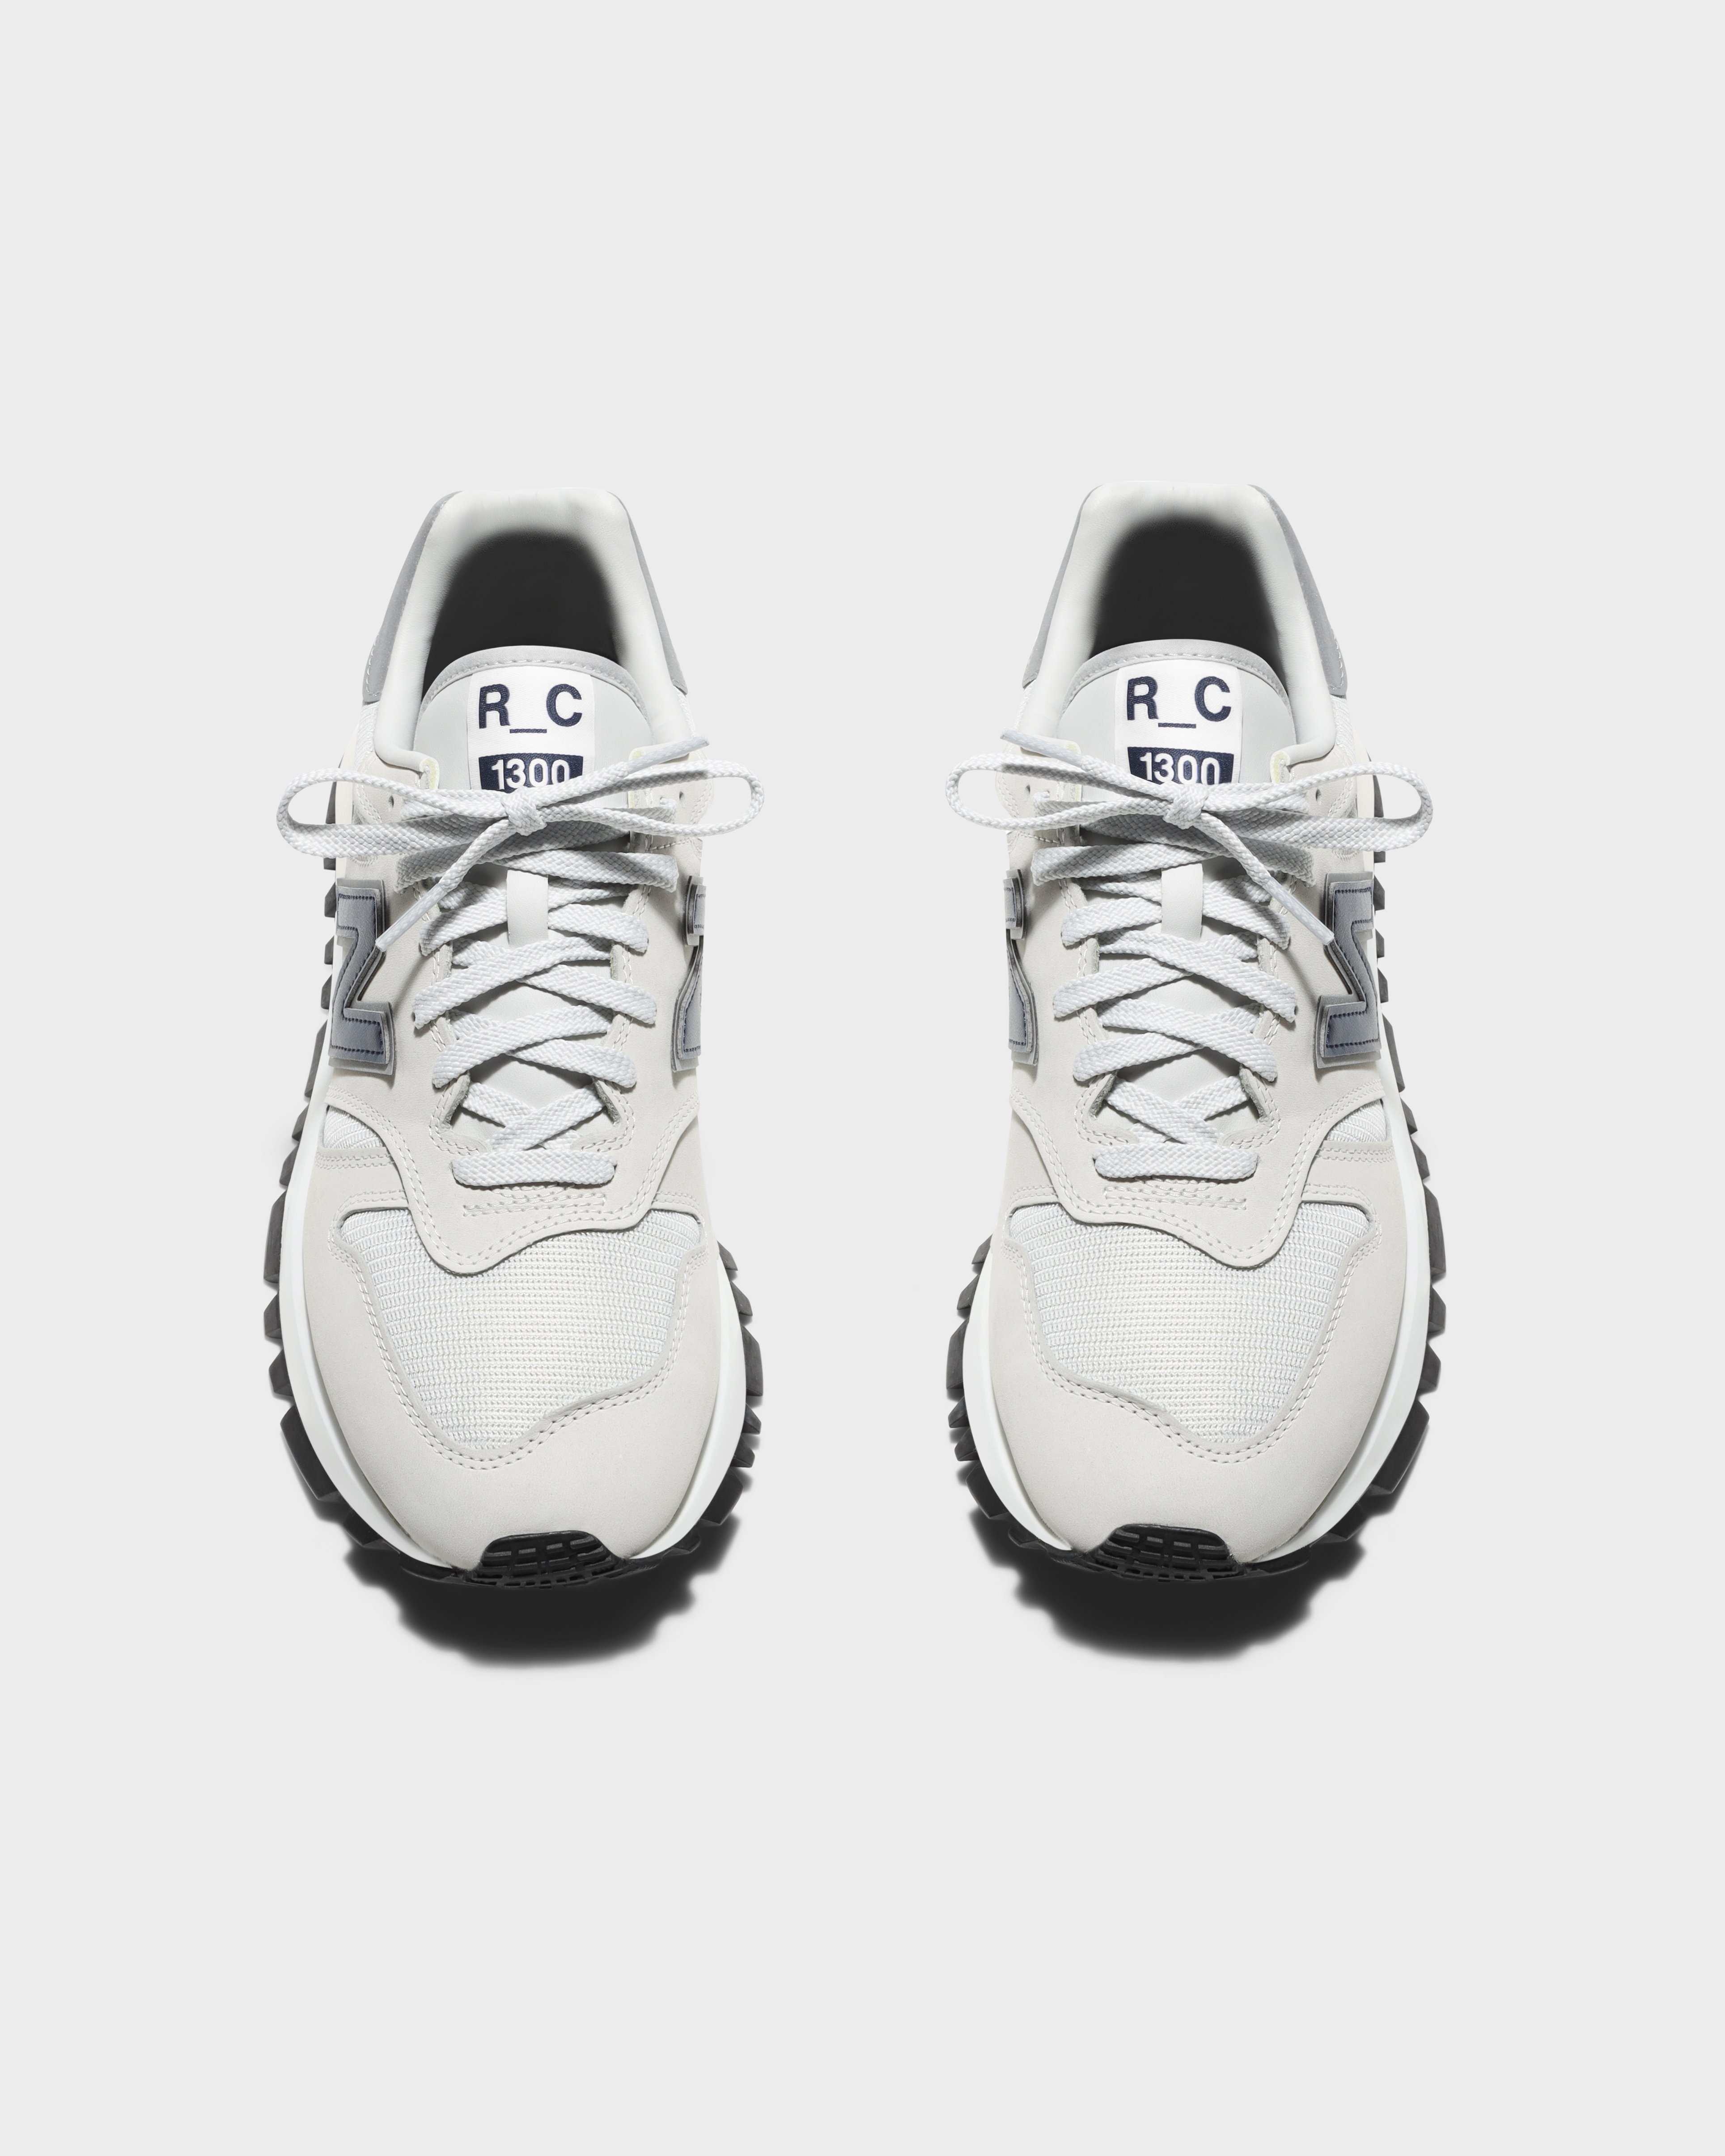 New Balance - Tokyo Design Studio R-C1300 Grey - Footwear - White - Image 5